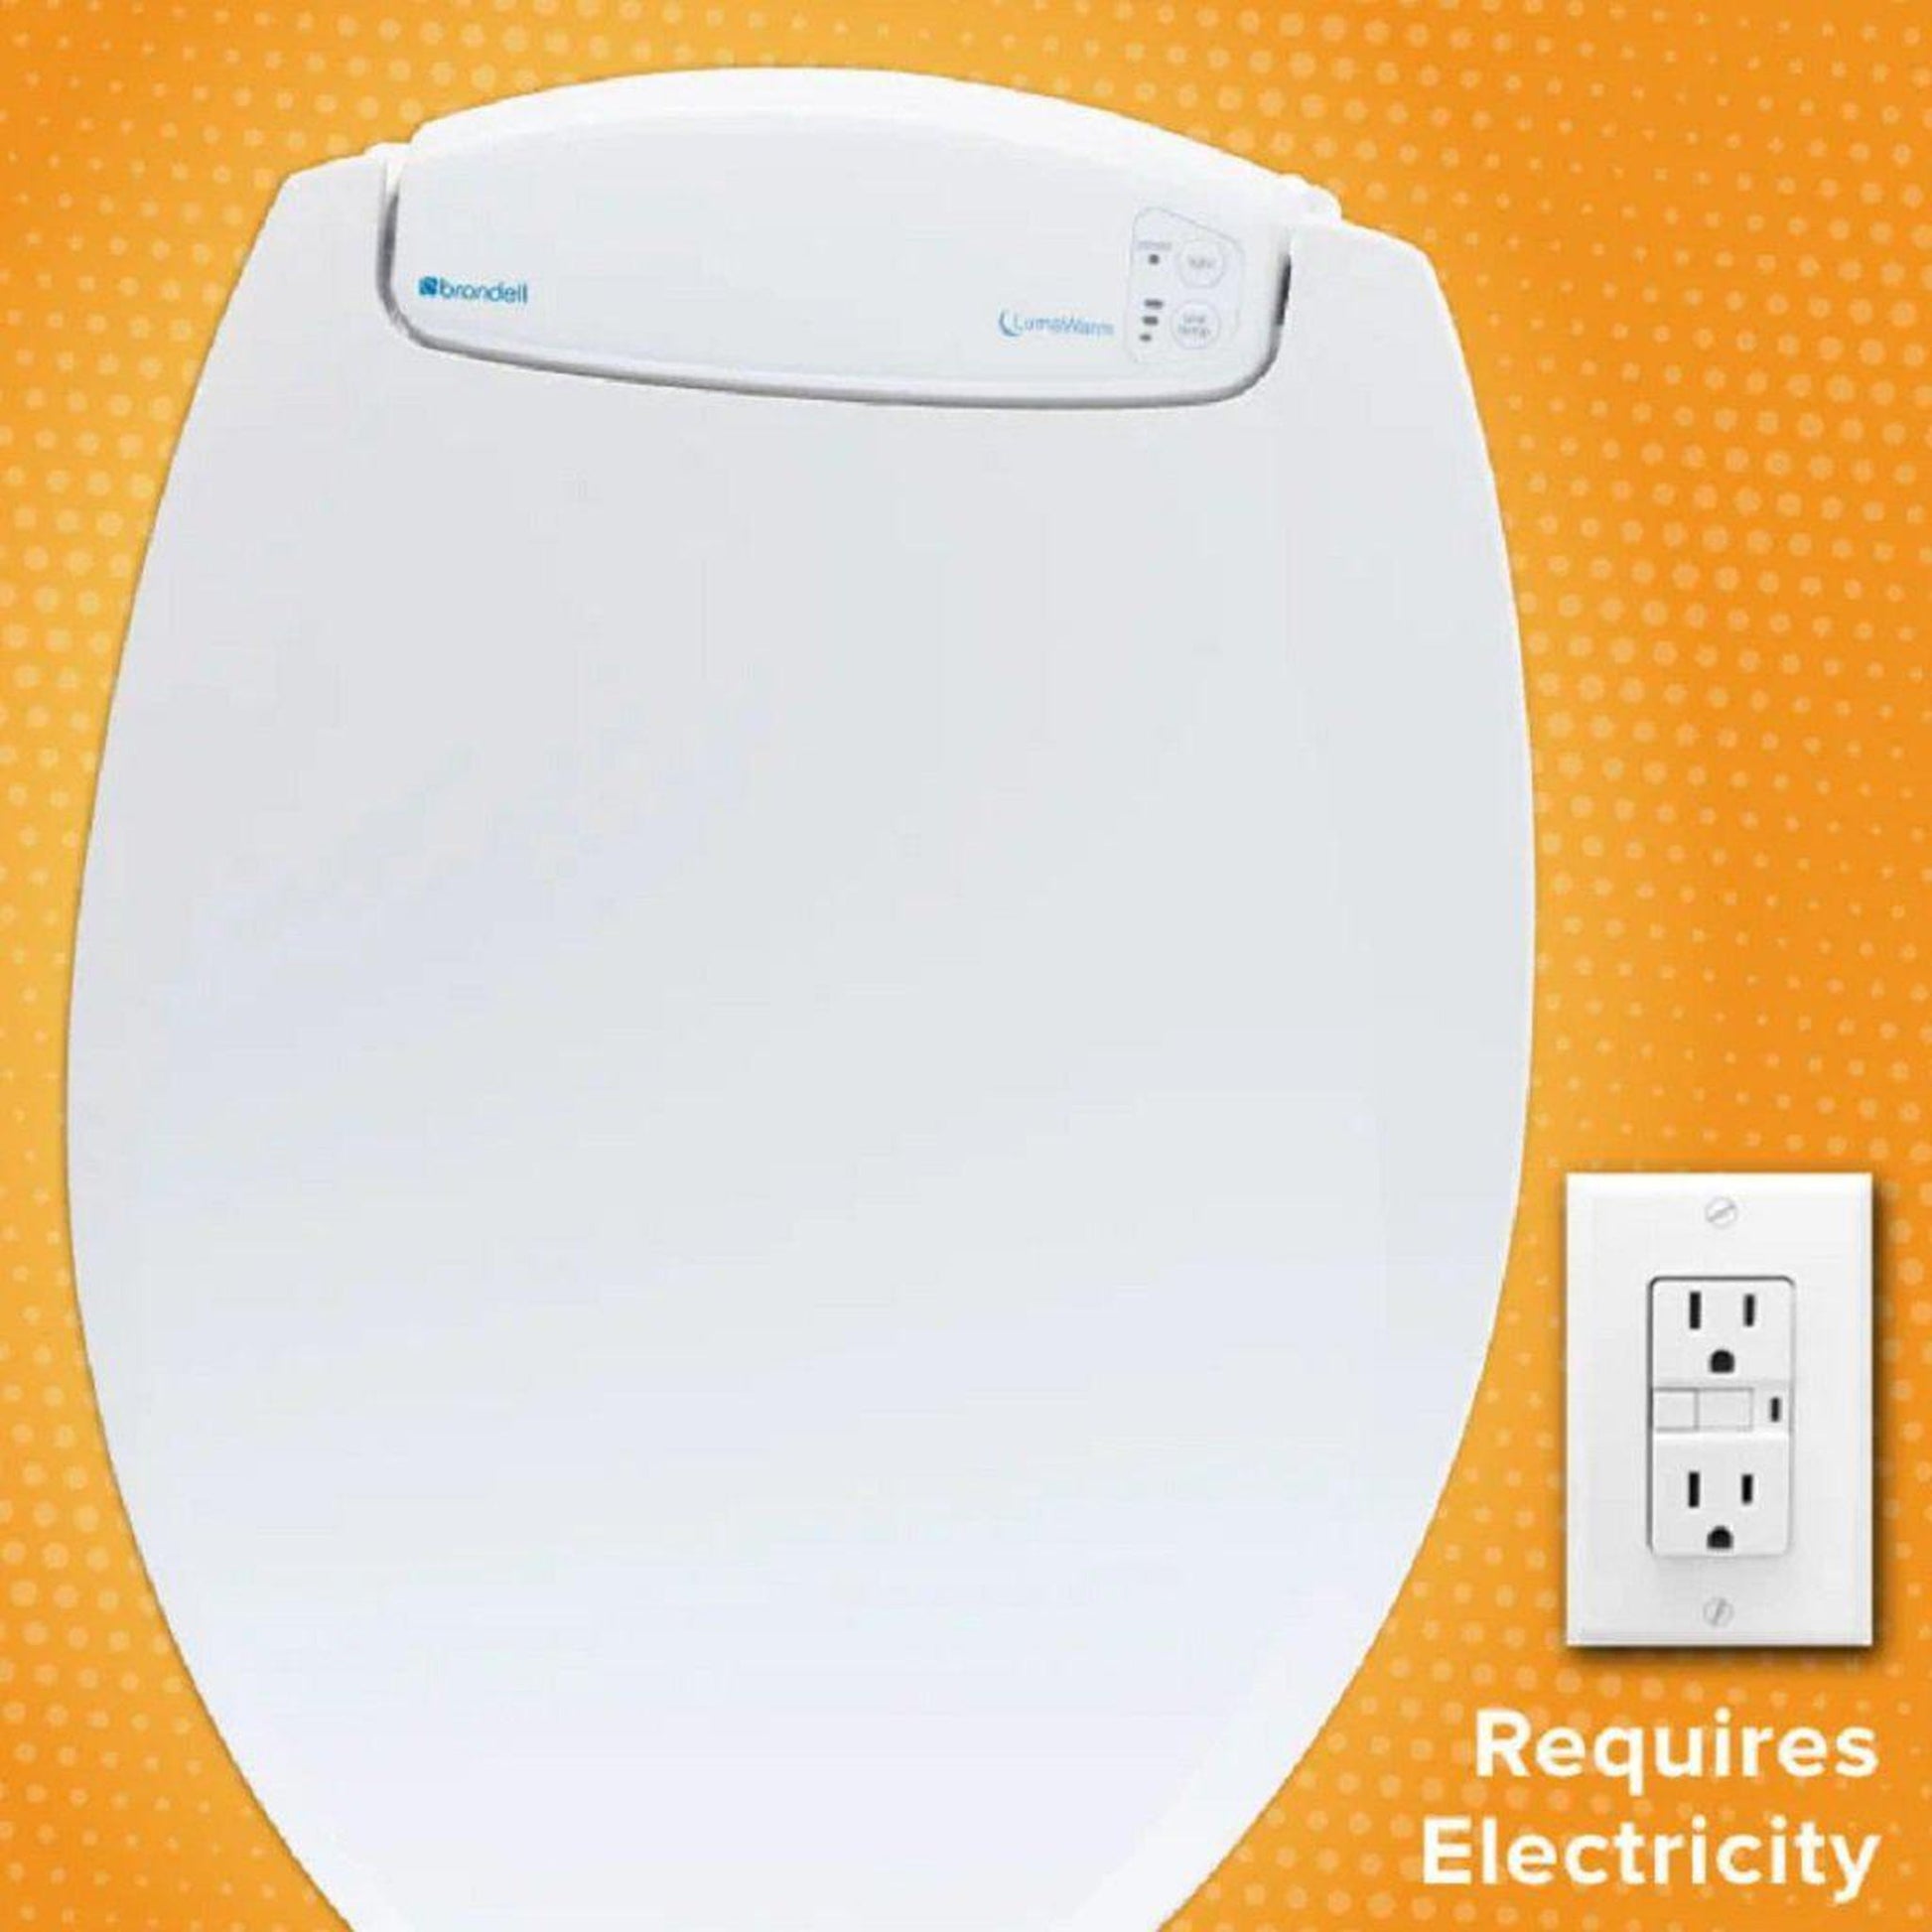 Brondell LumaWarm 18.5" White Round Electric Heated Nightlight Luxury Toilet Seat